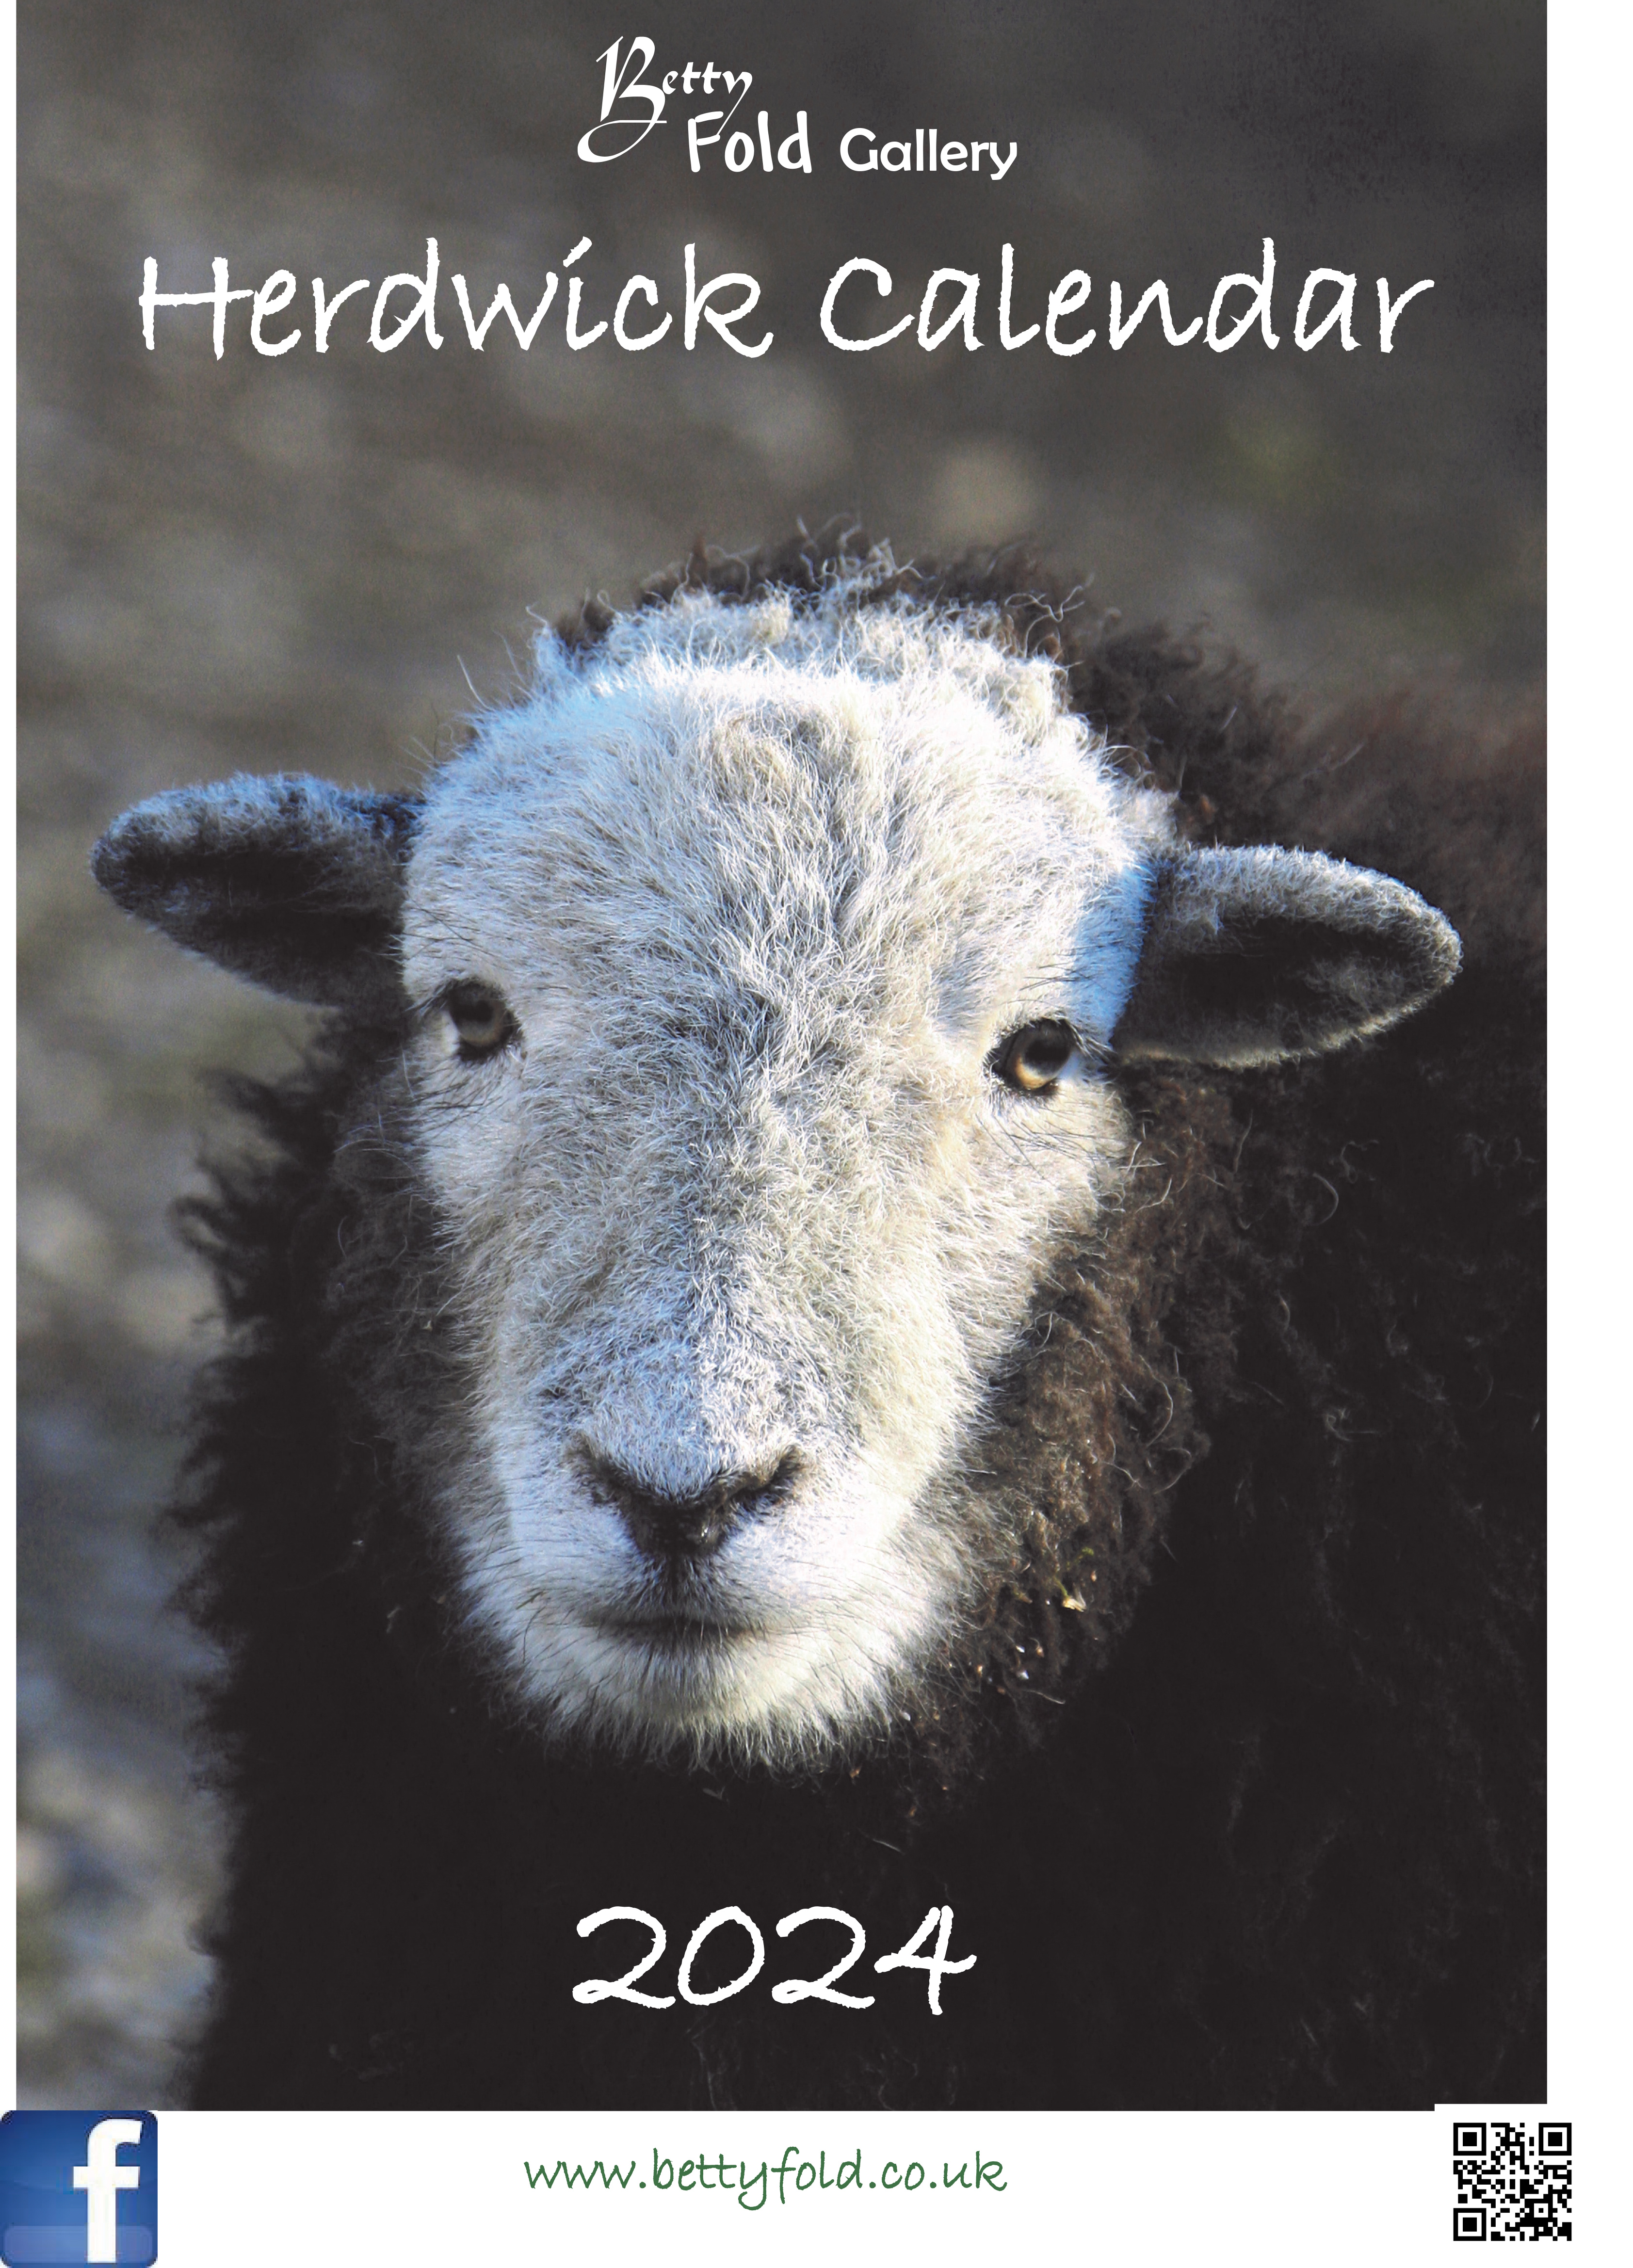 Herdwick sheep calendars by Betty Fold Gallery